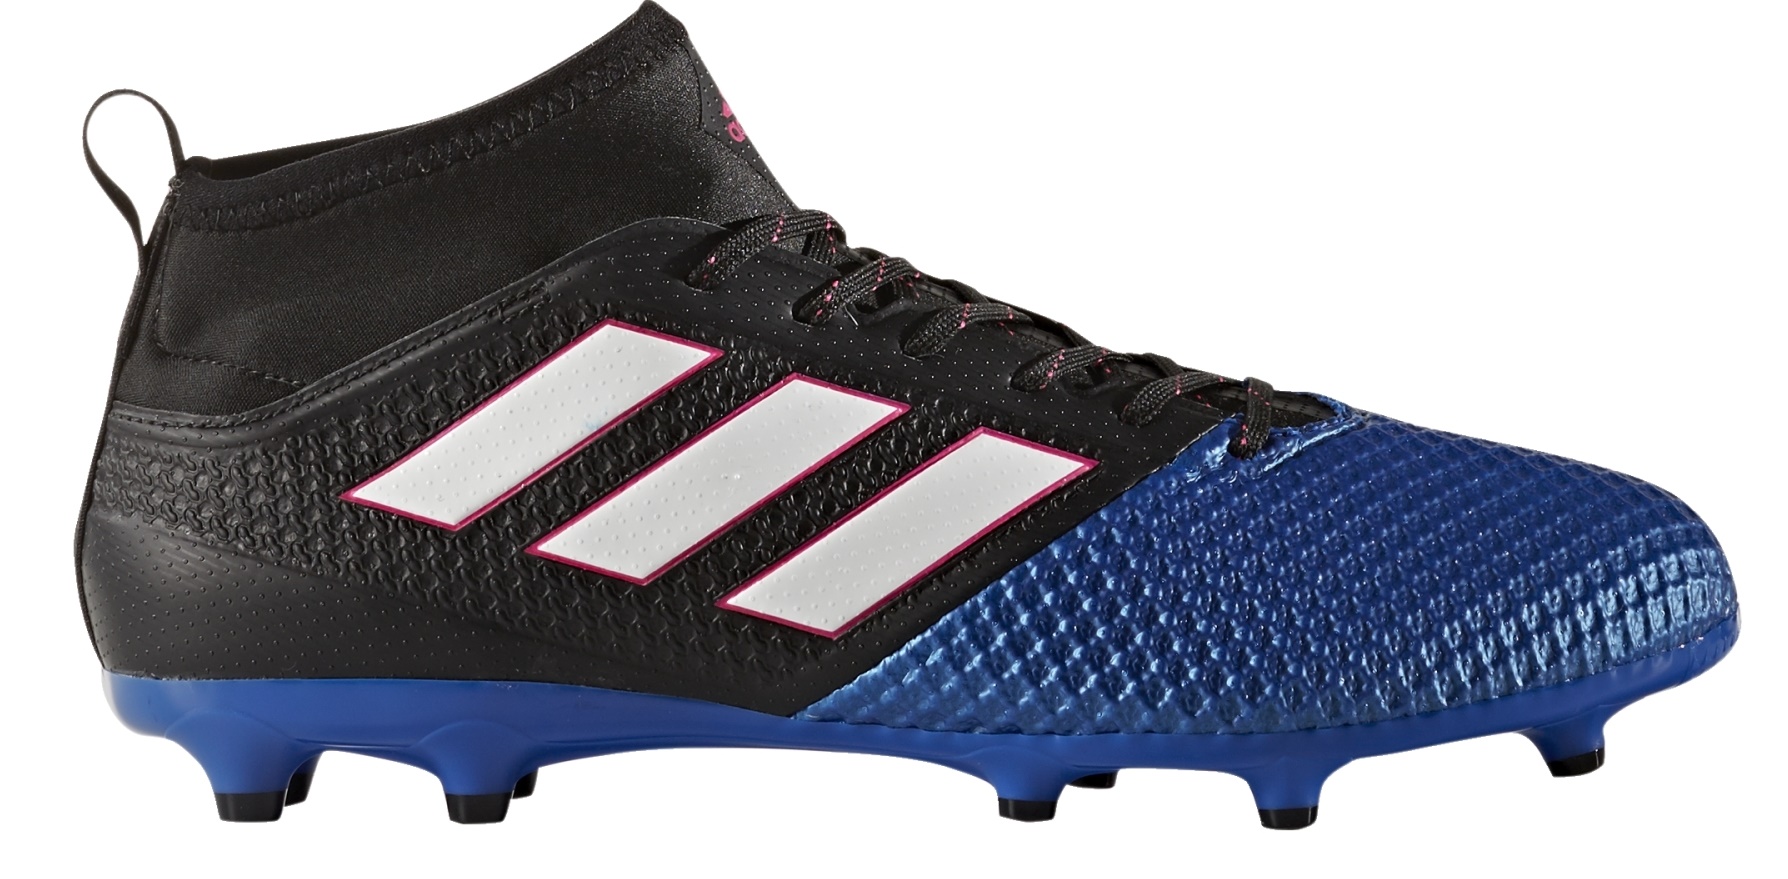 Adidas Football boots Ace 17.3 